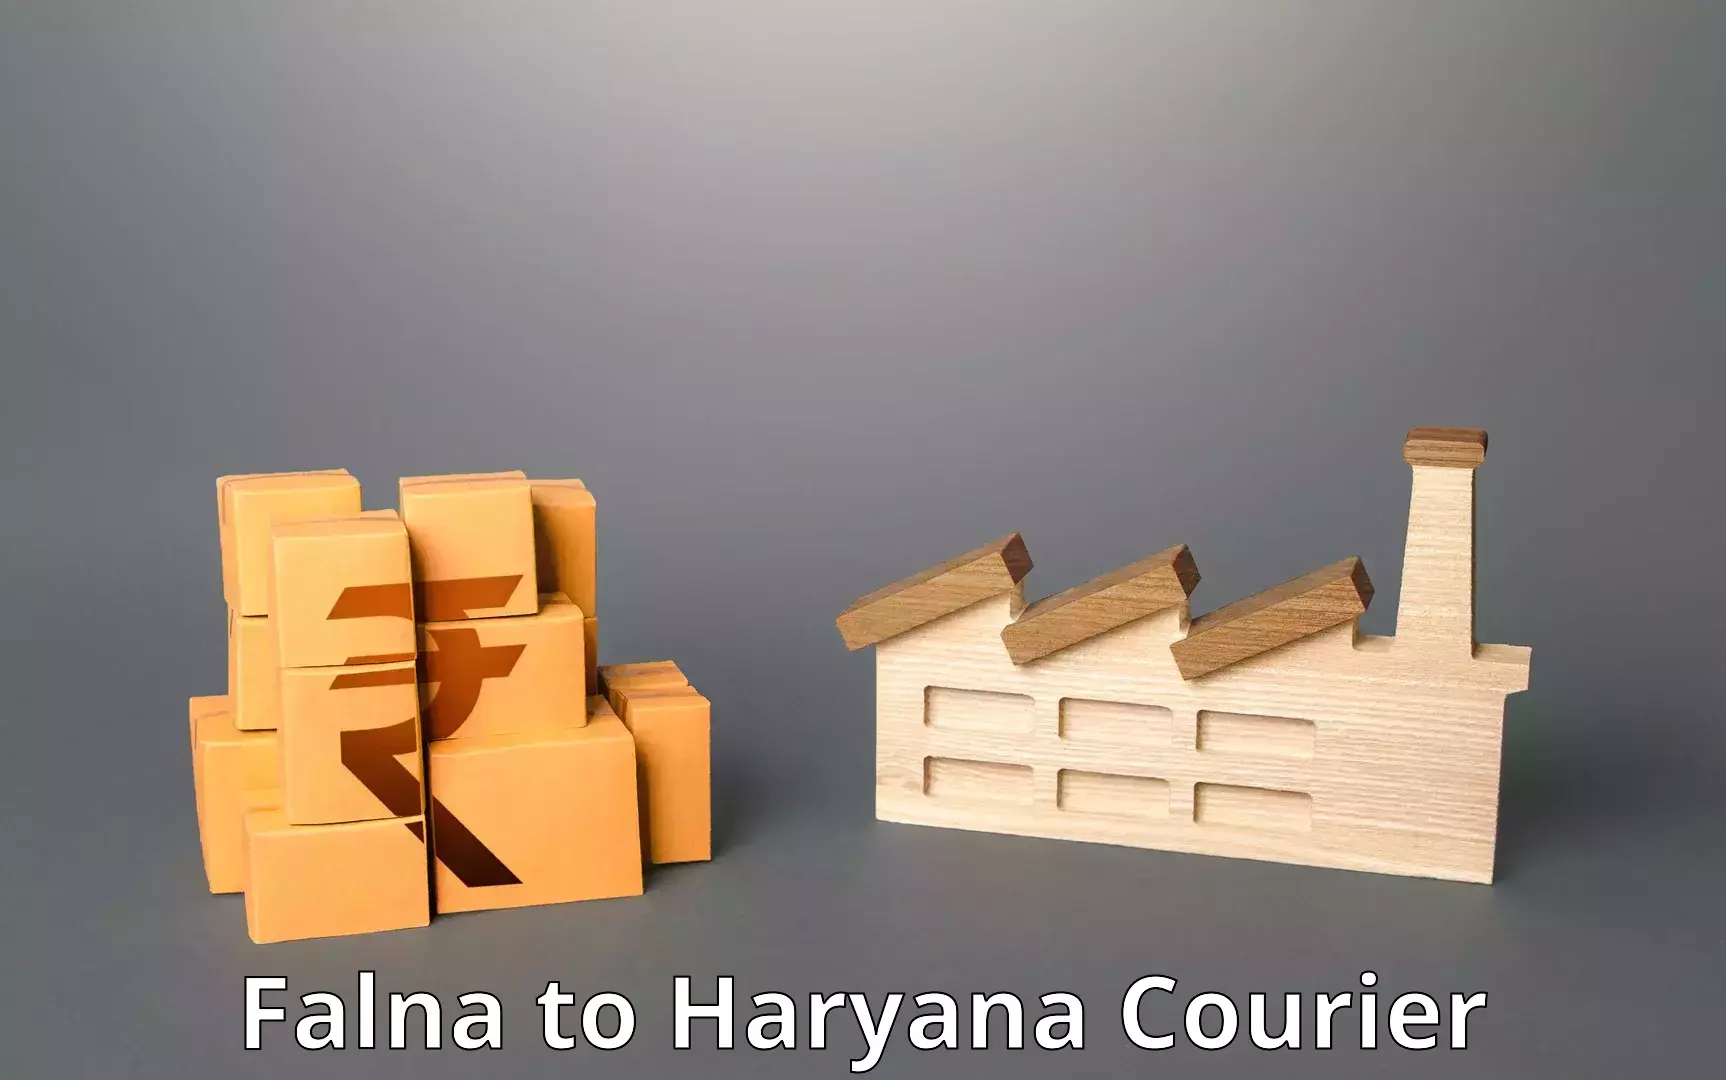 Global logistics network Falna to Haryana